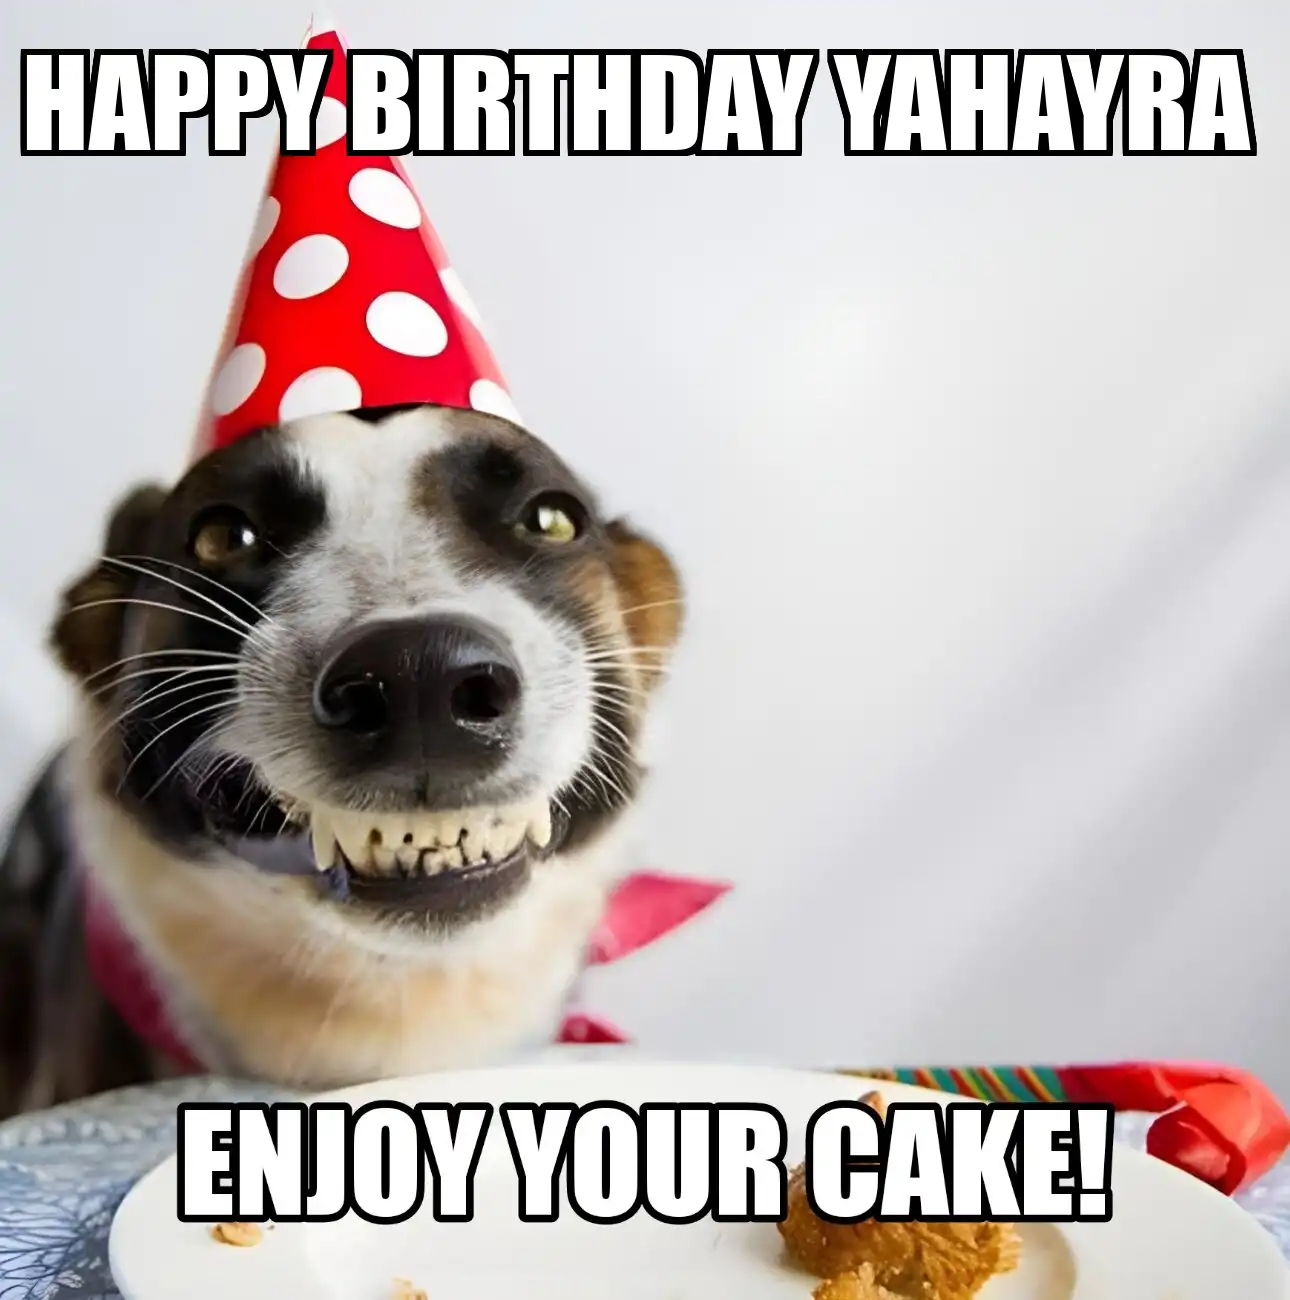 Happy Birthday Yahayra Enjoy Your Cake Dog Meme